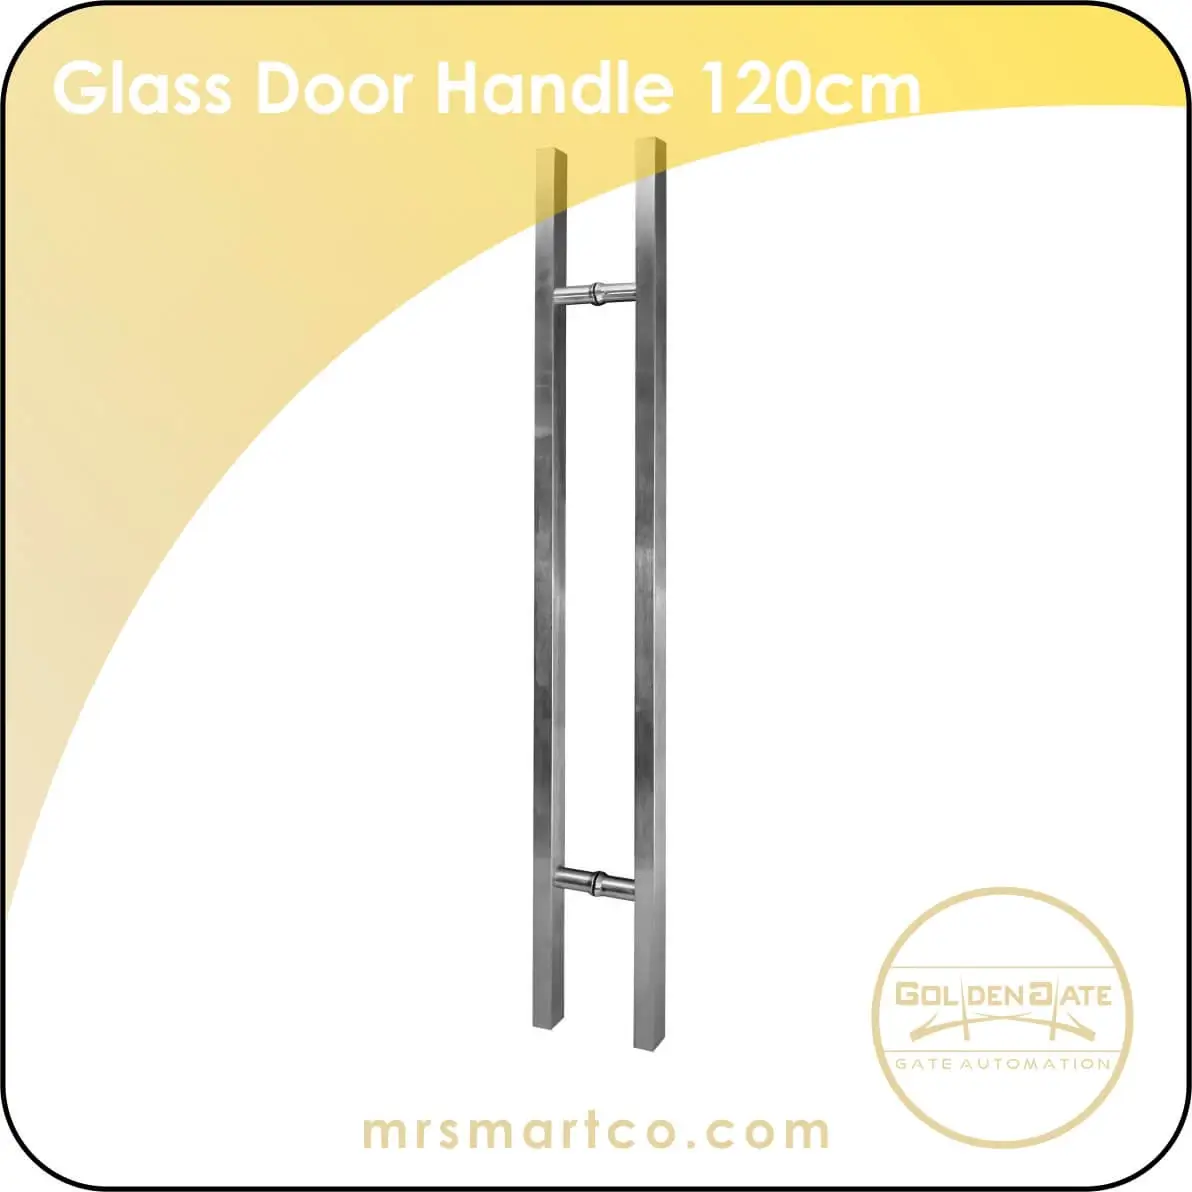 glass doo Handle 120cm